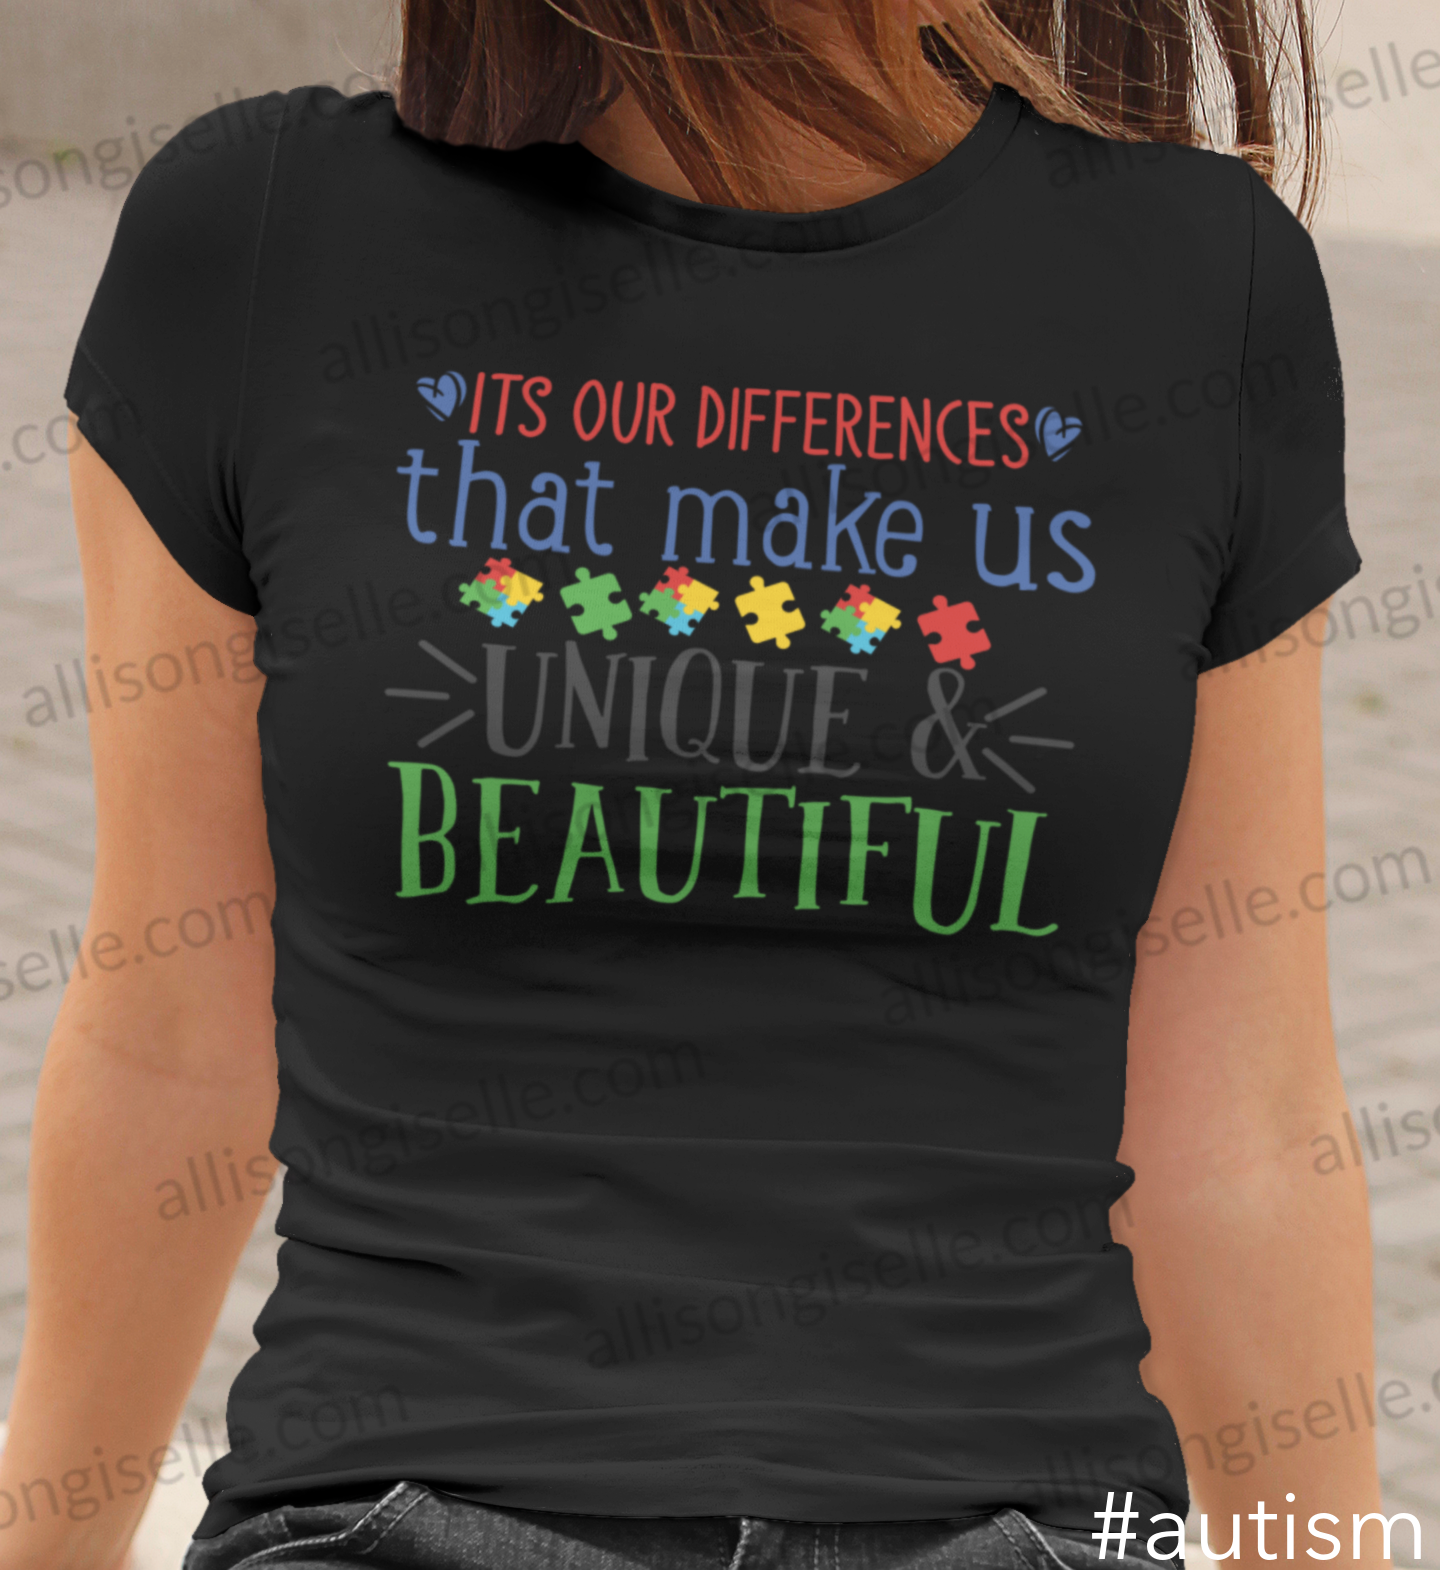 It's Our Differences That Make Us Unique & Beautiful Autism Shirt, Adult Autism Shirt, Autism Awareness Shirt Adult